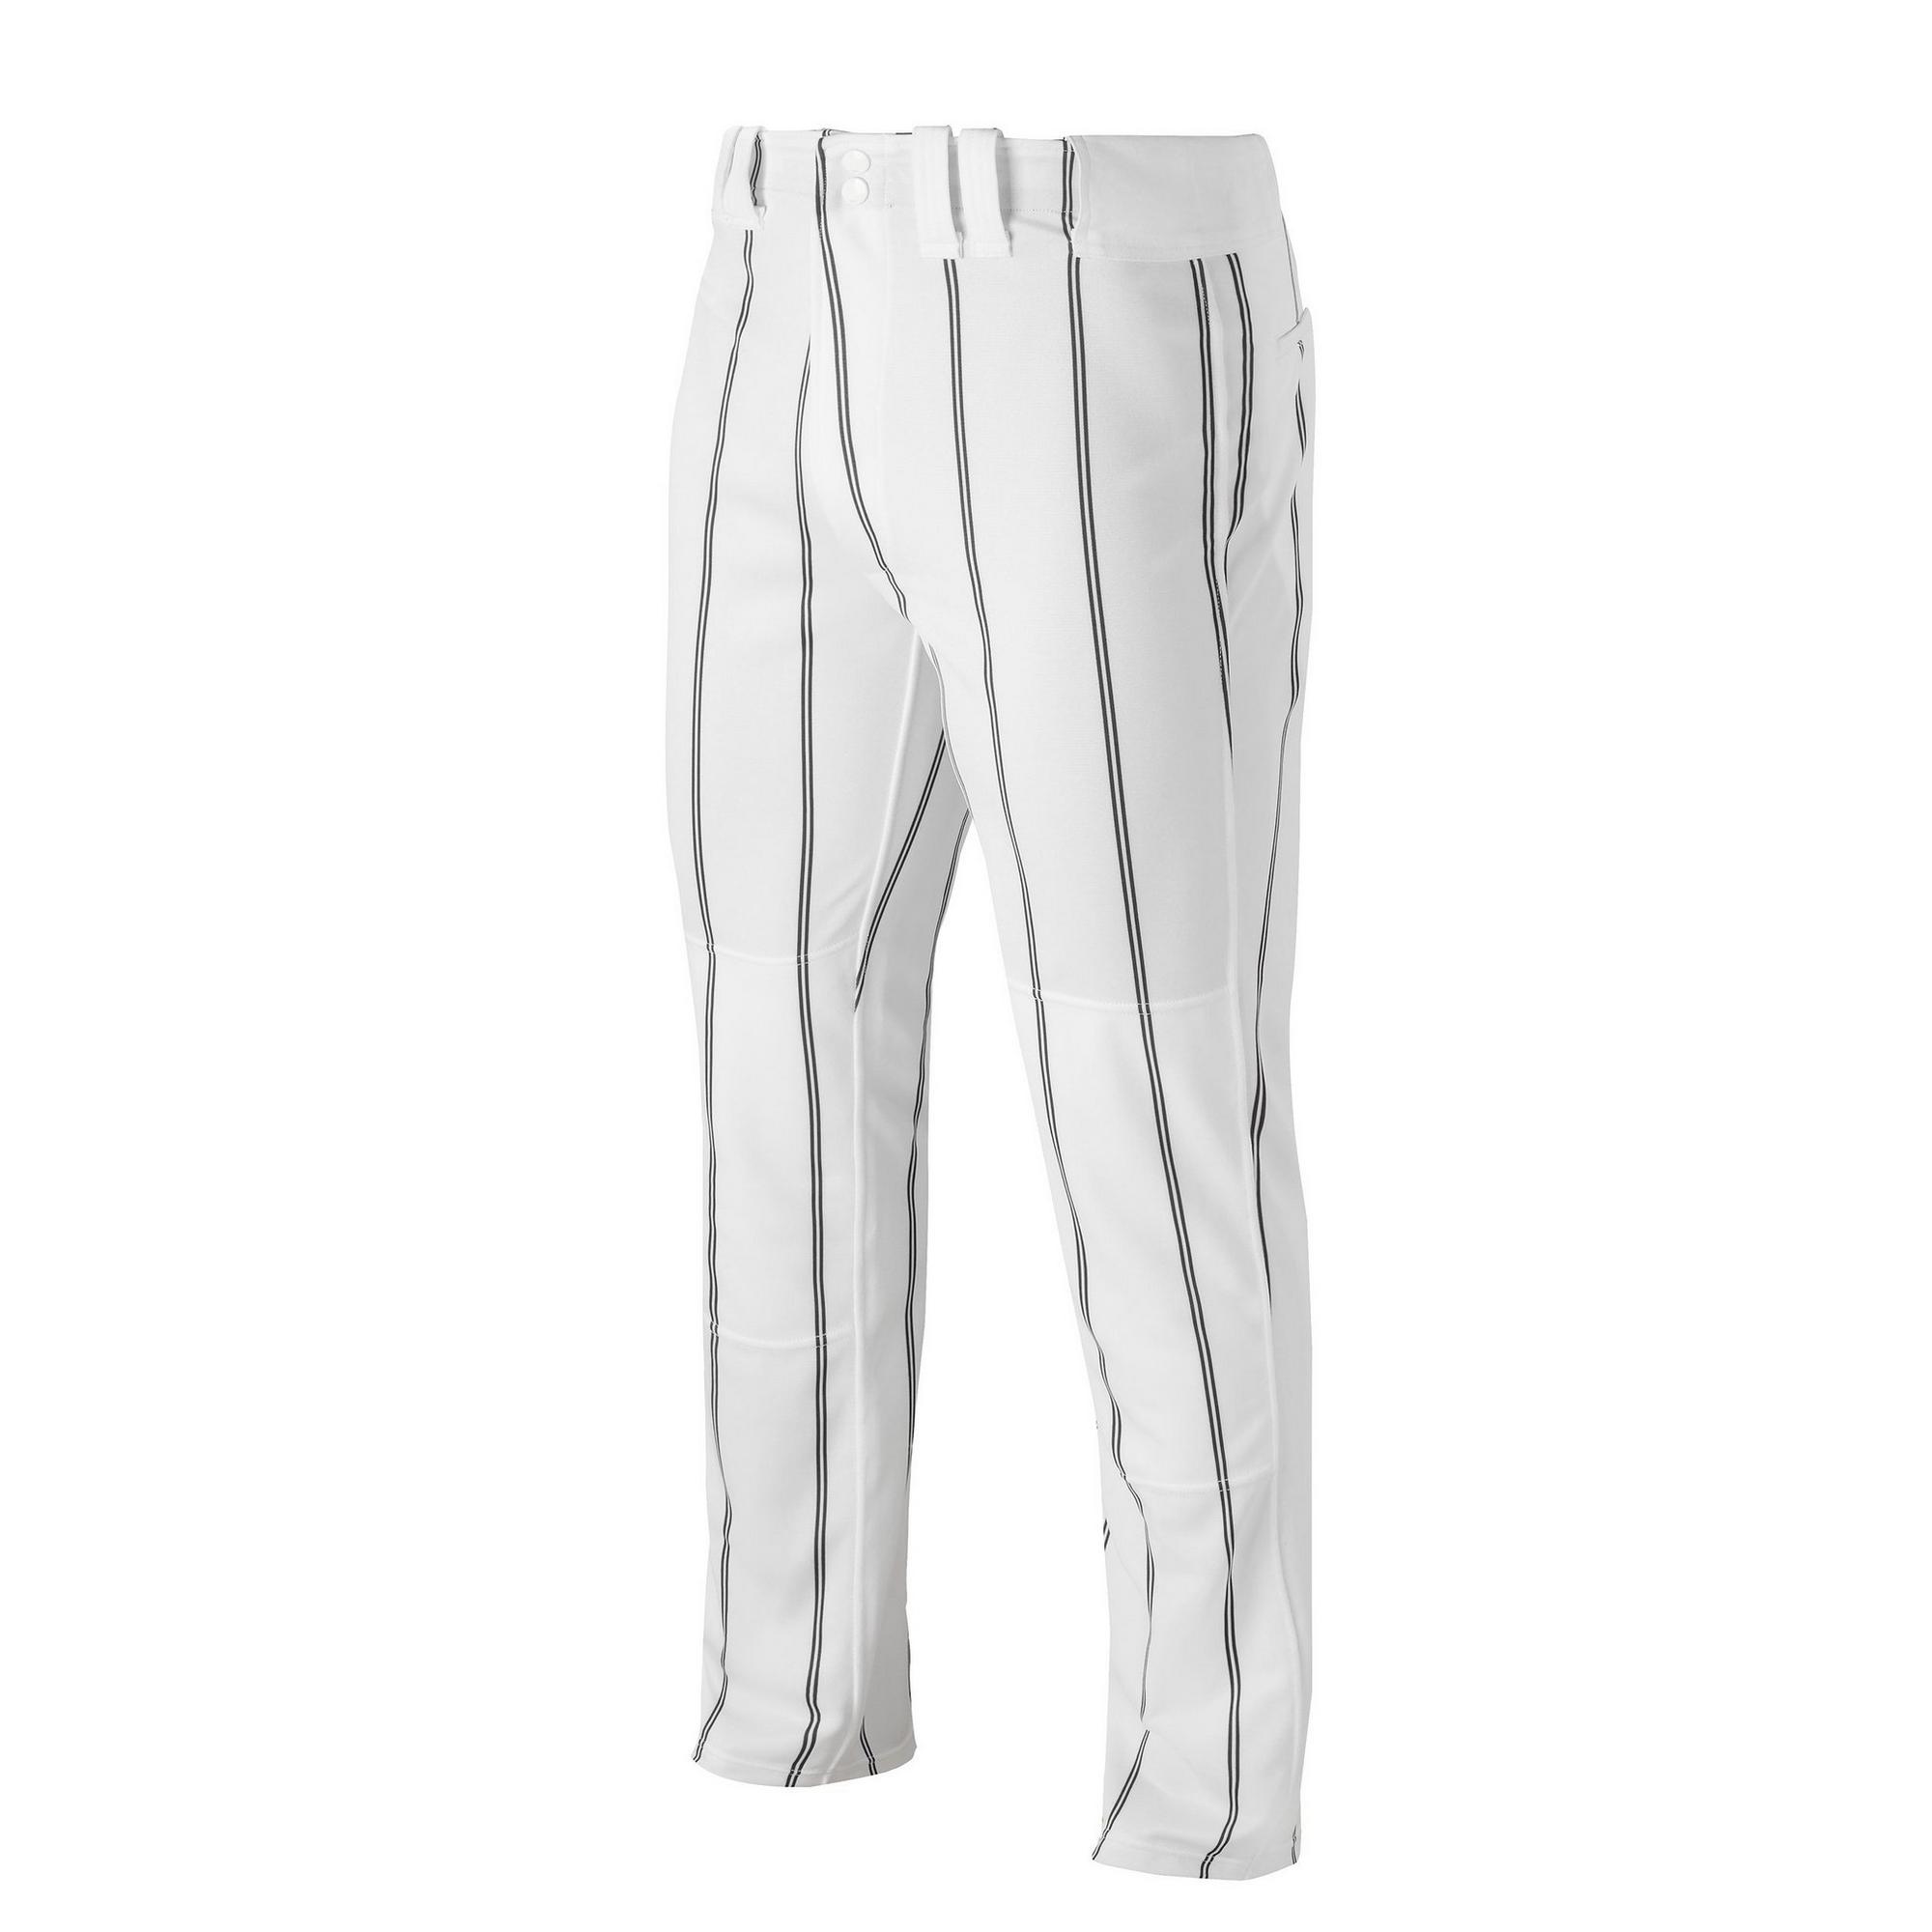 Mizuno Pro Pinstripe Pant - Large - White / Black